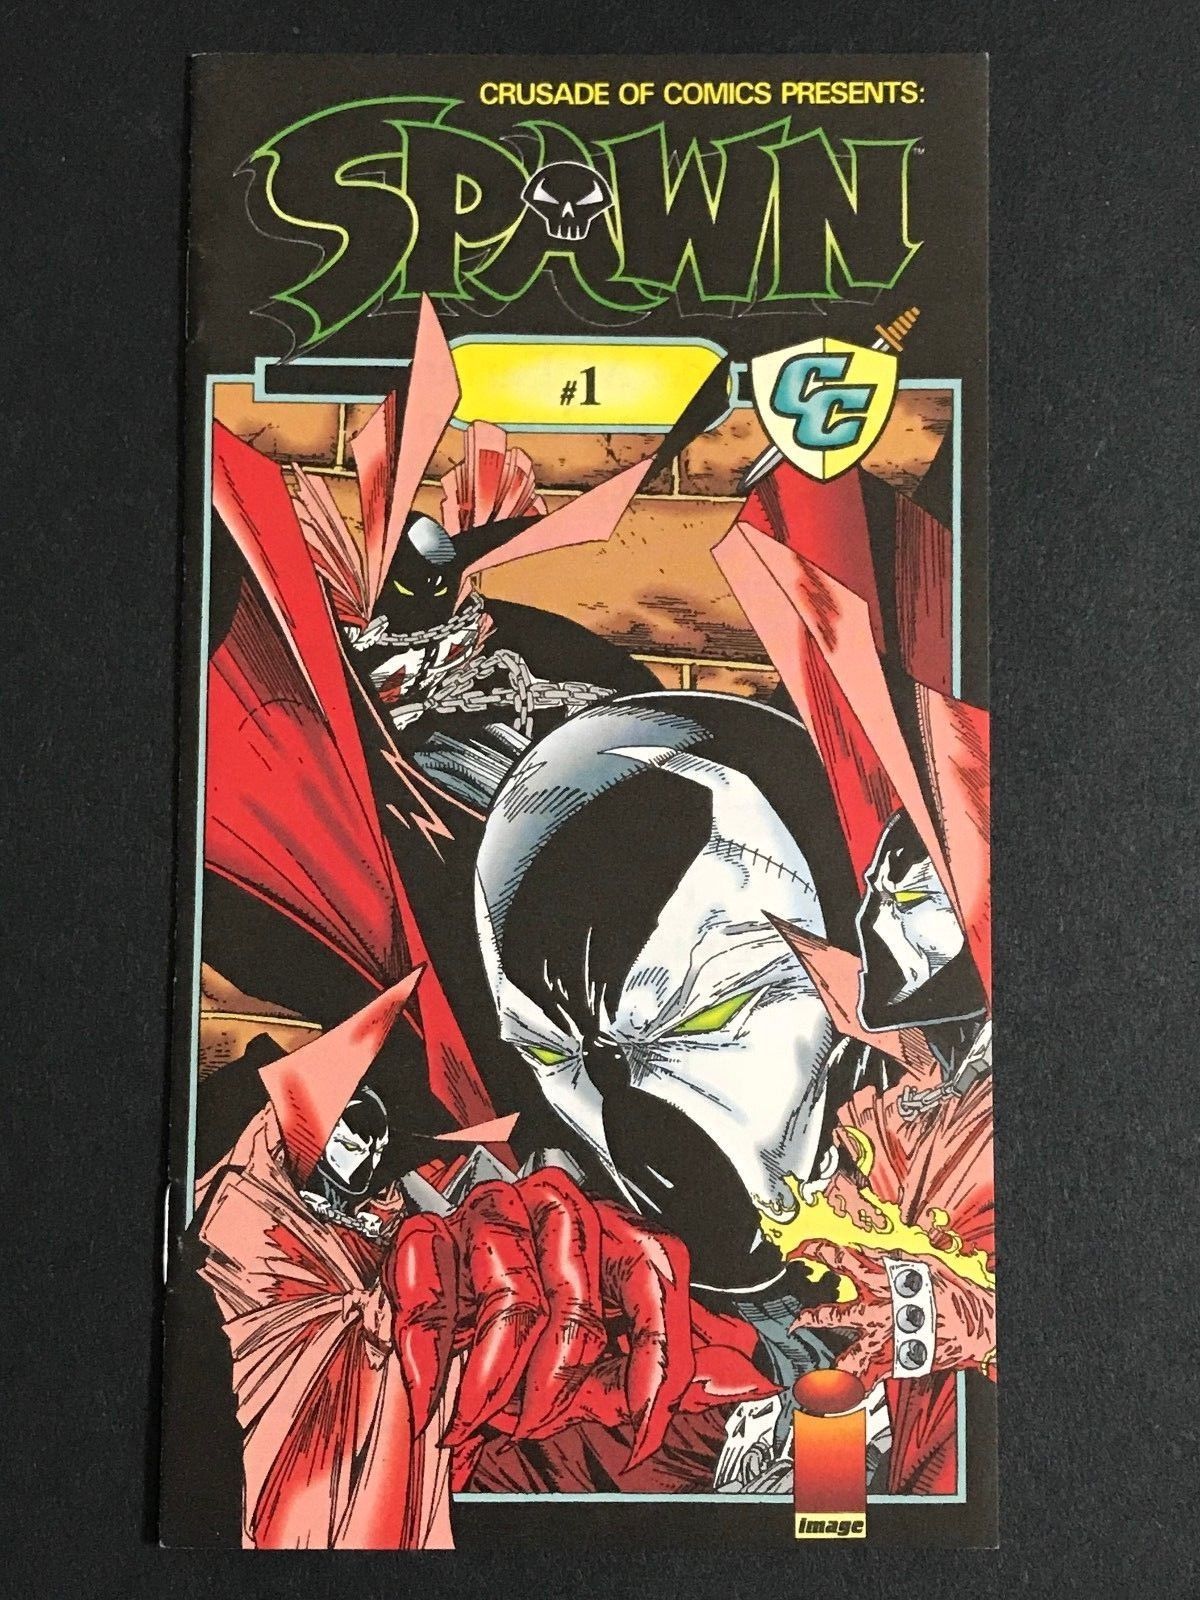 Crusade of Comics Presents Spawn #1 Comic